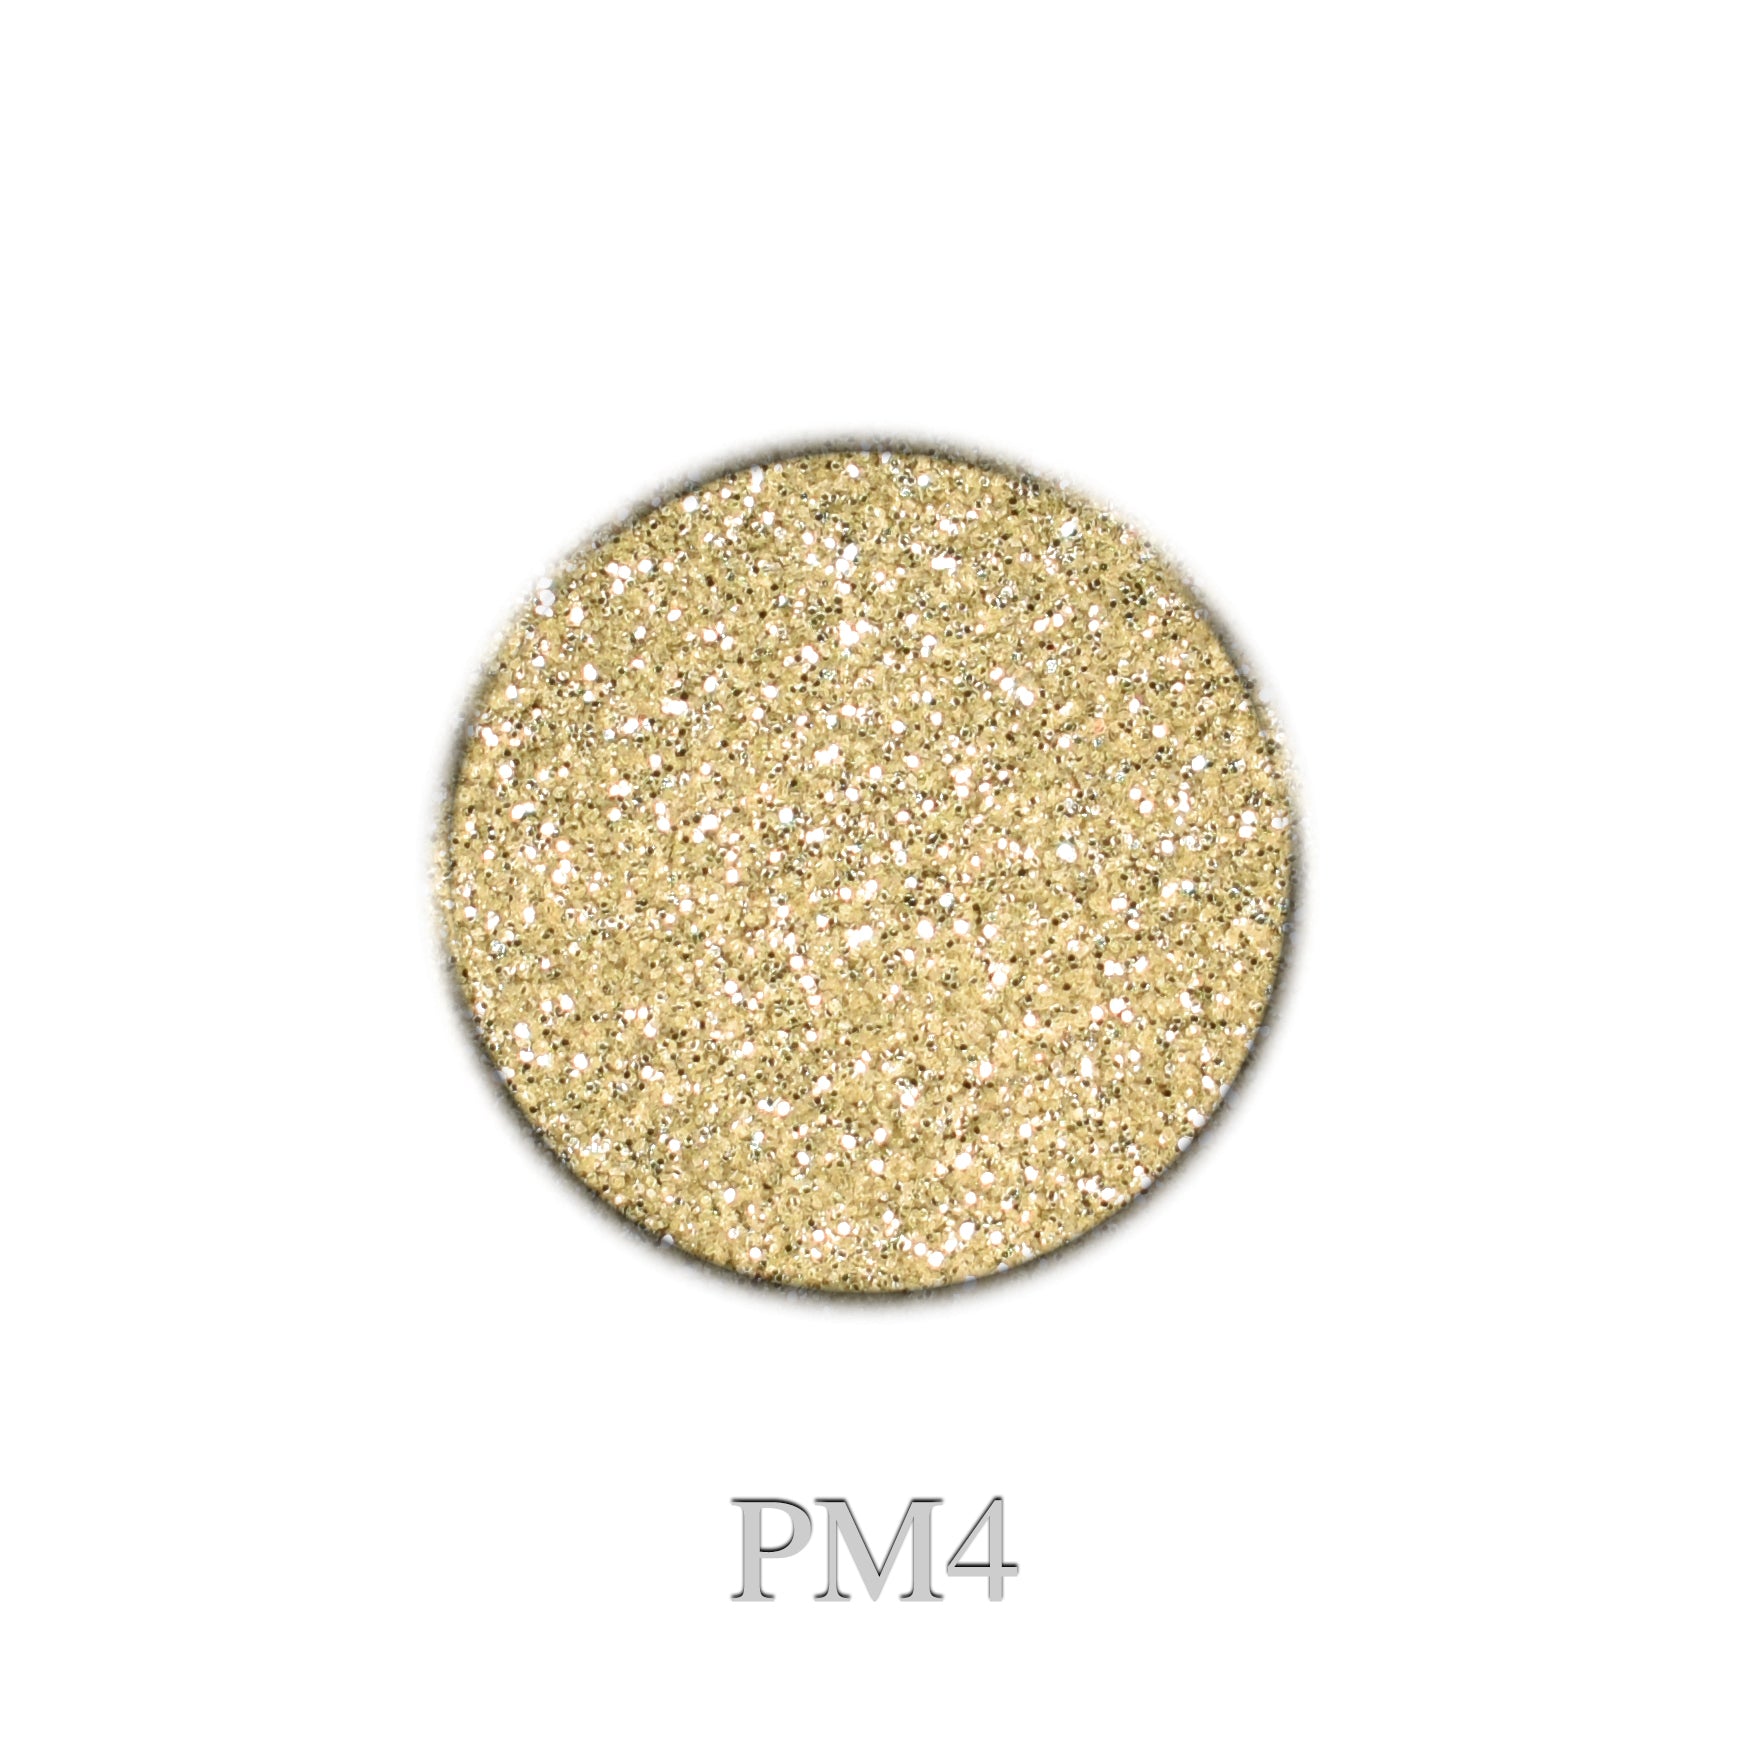 Precious metal glitter PM4